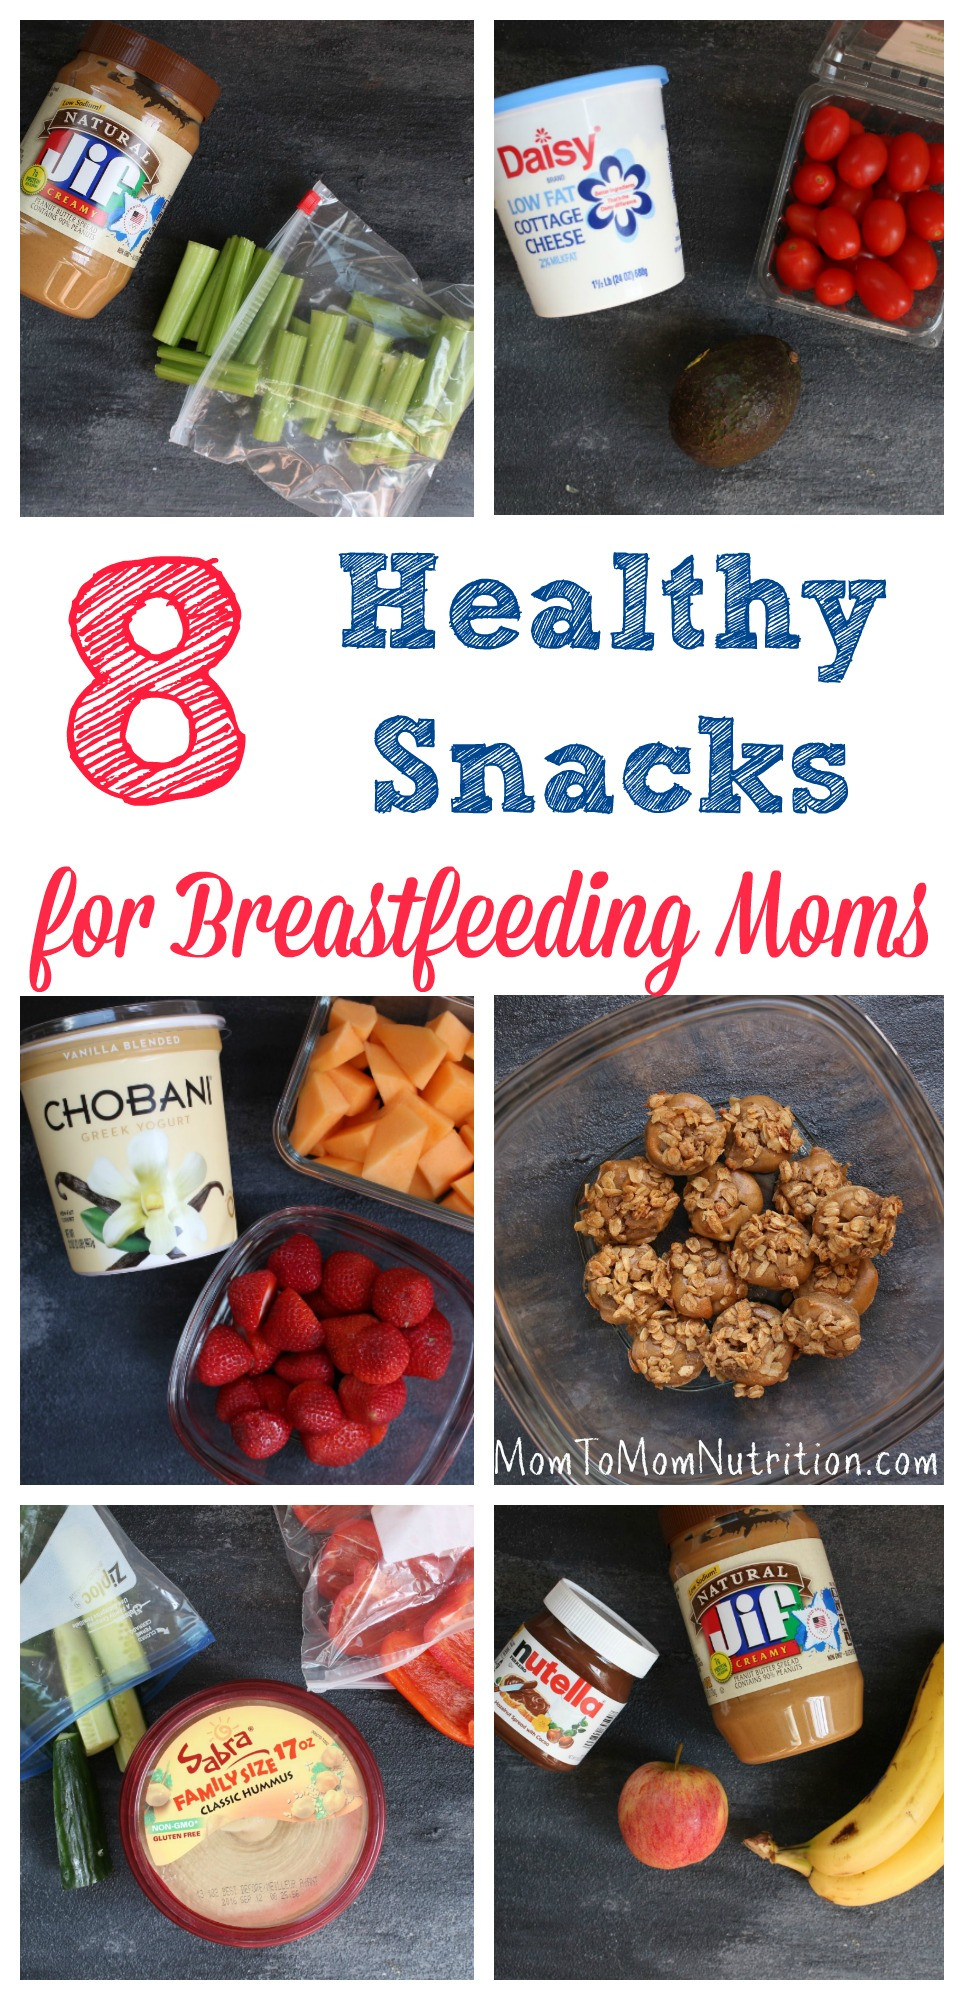 Healthy Snacks While Breastfeeding
 8 Healthy Snacks for Breastfeeding Moms Mom to Mom Nutrition